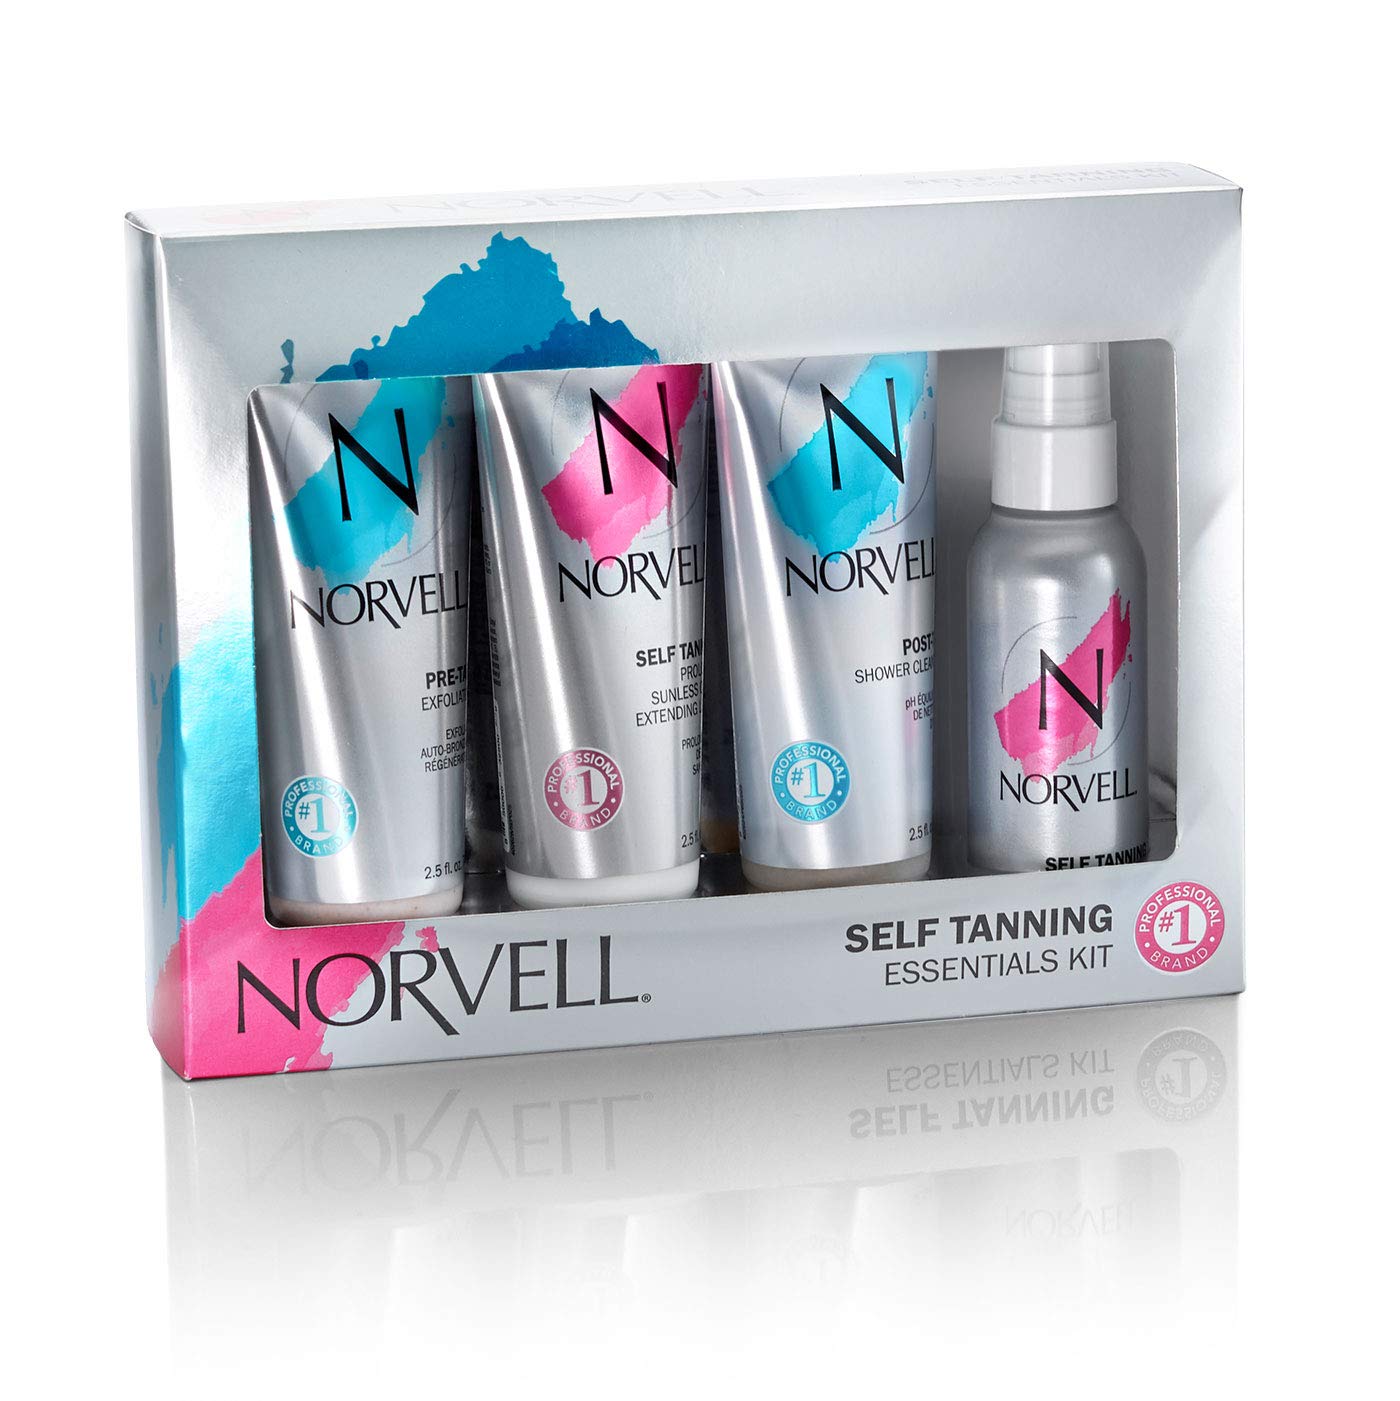 Norvell Self Tanning Essentials Kit